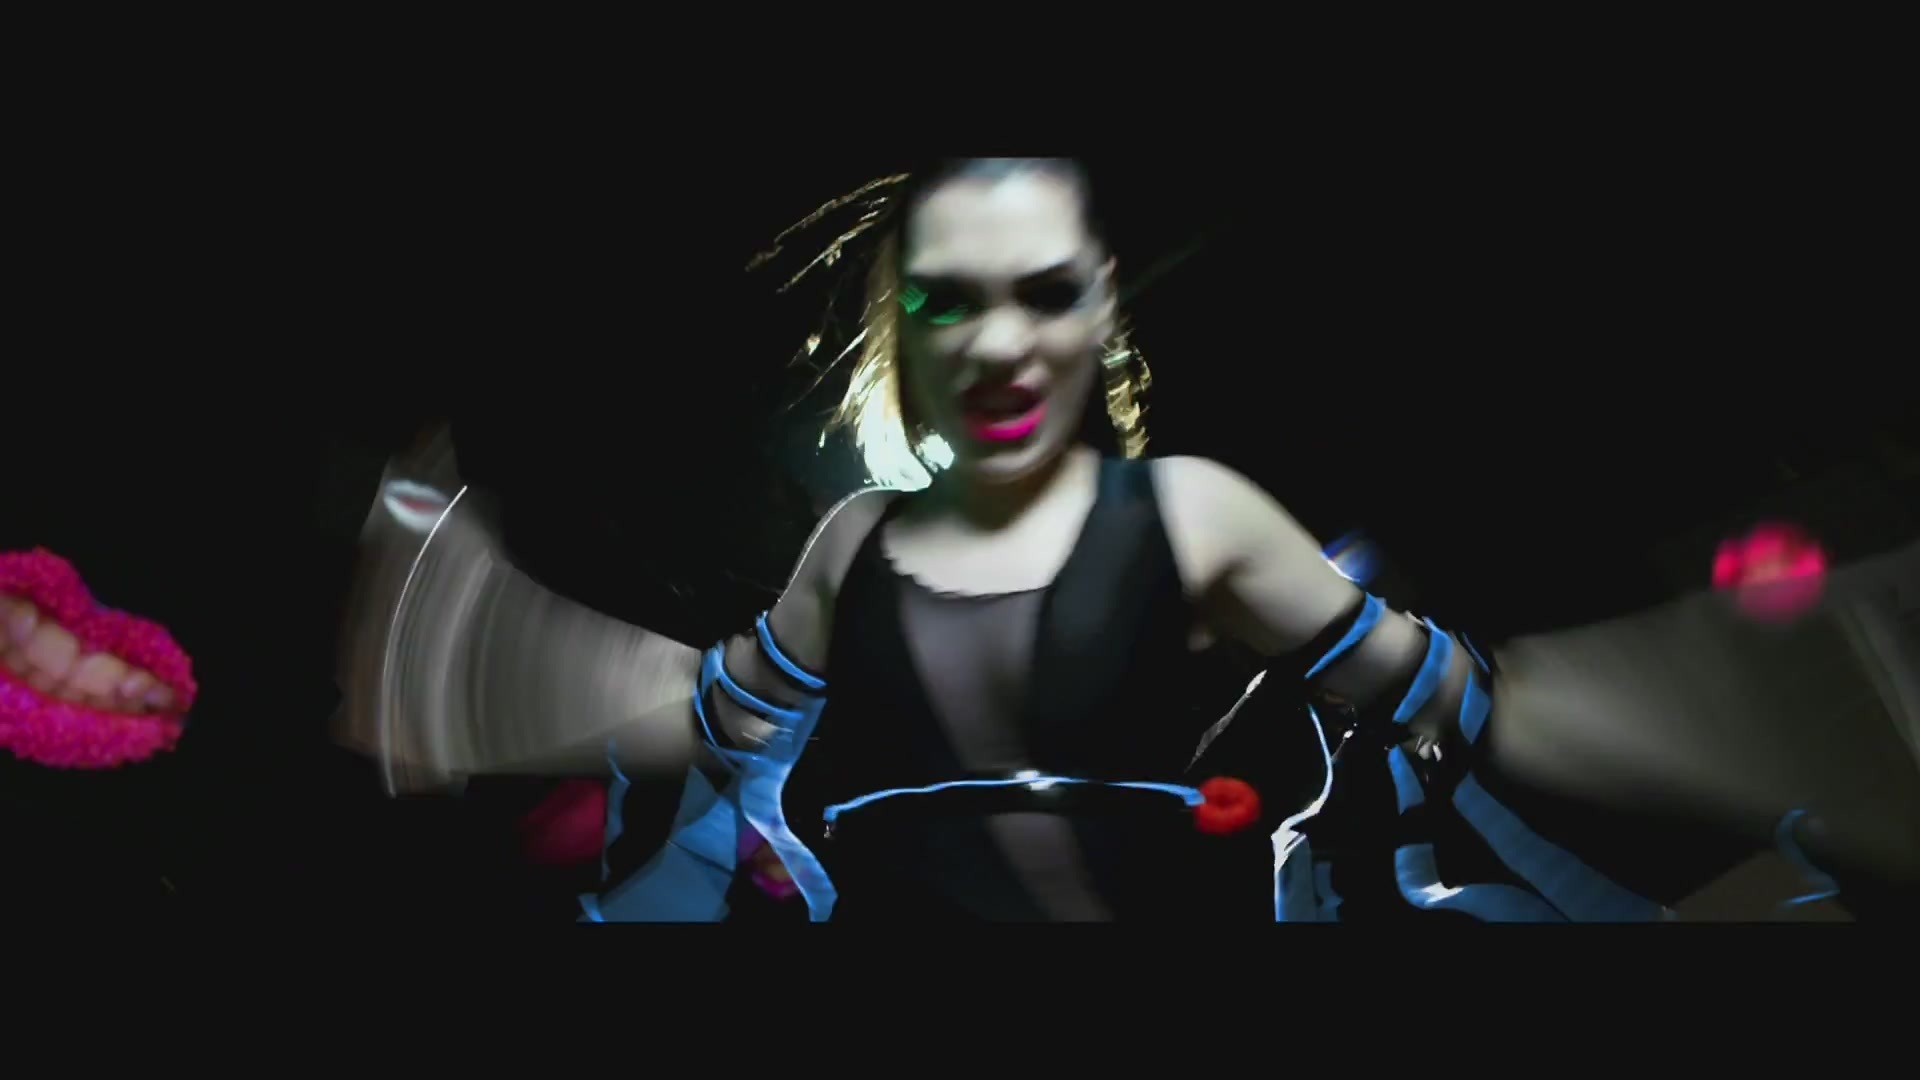 Nobody's Perfect [Music Video] - Jessie J Image (21700134) - Fanpop1920 x 1080